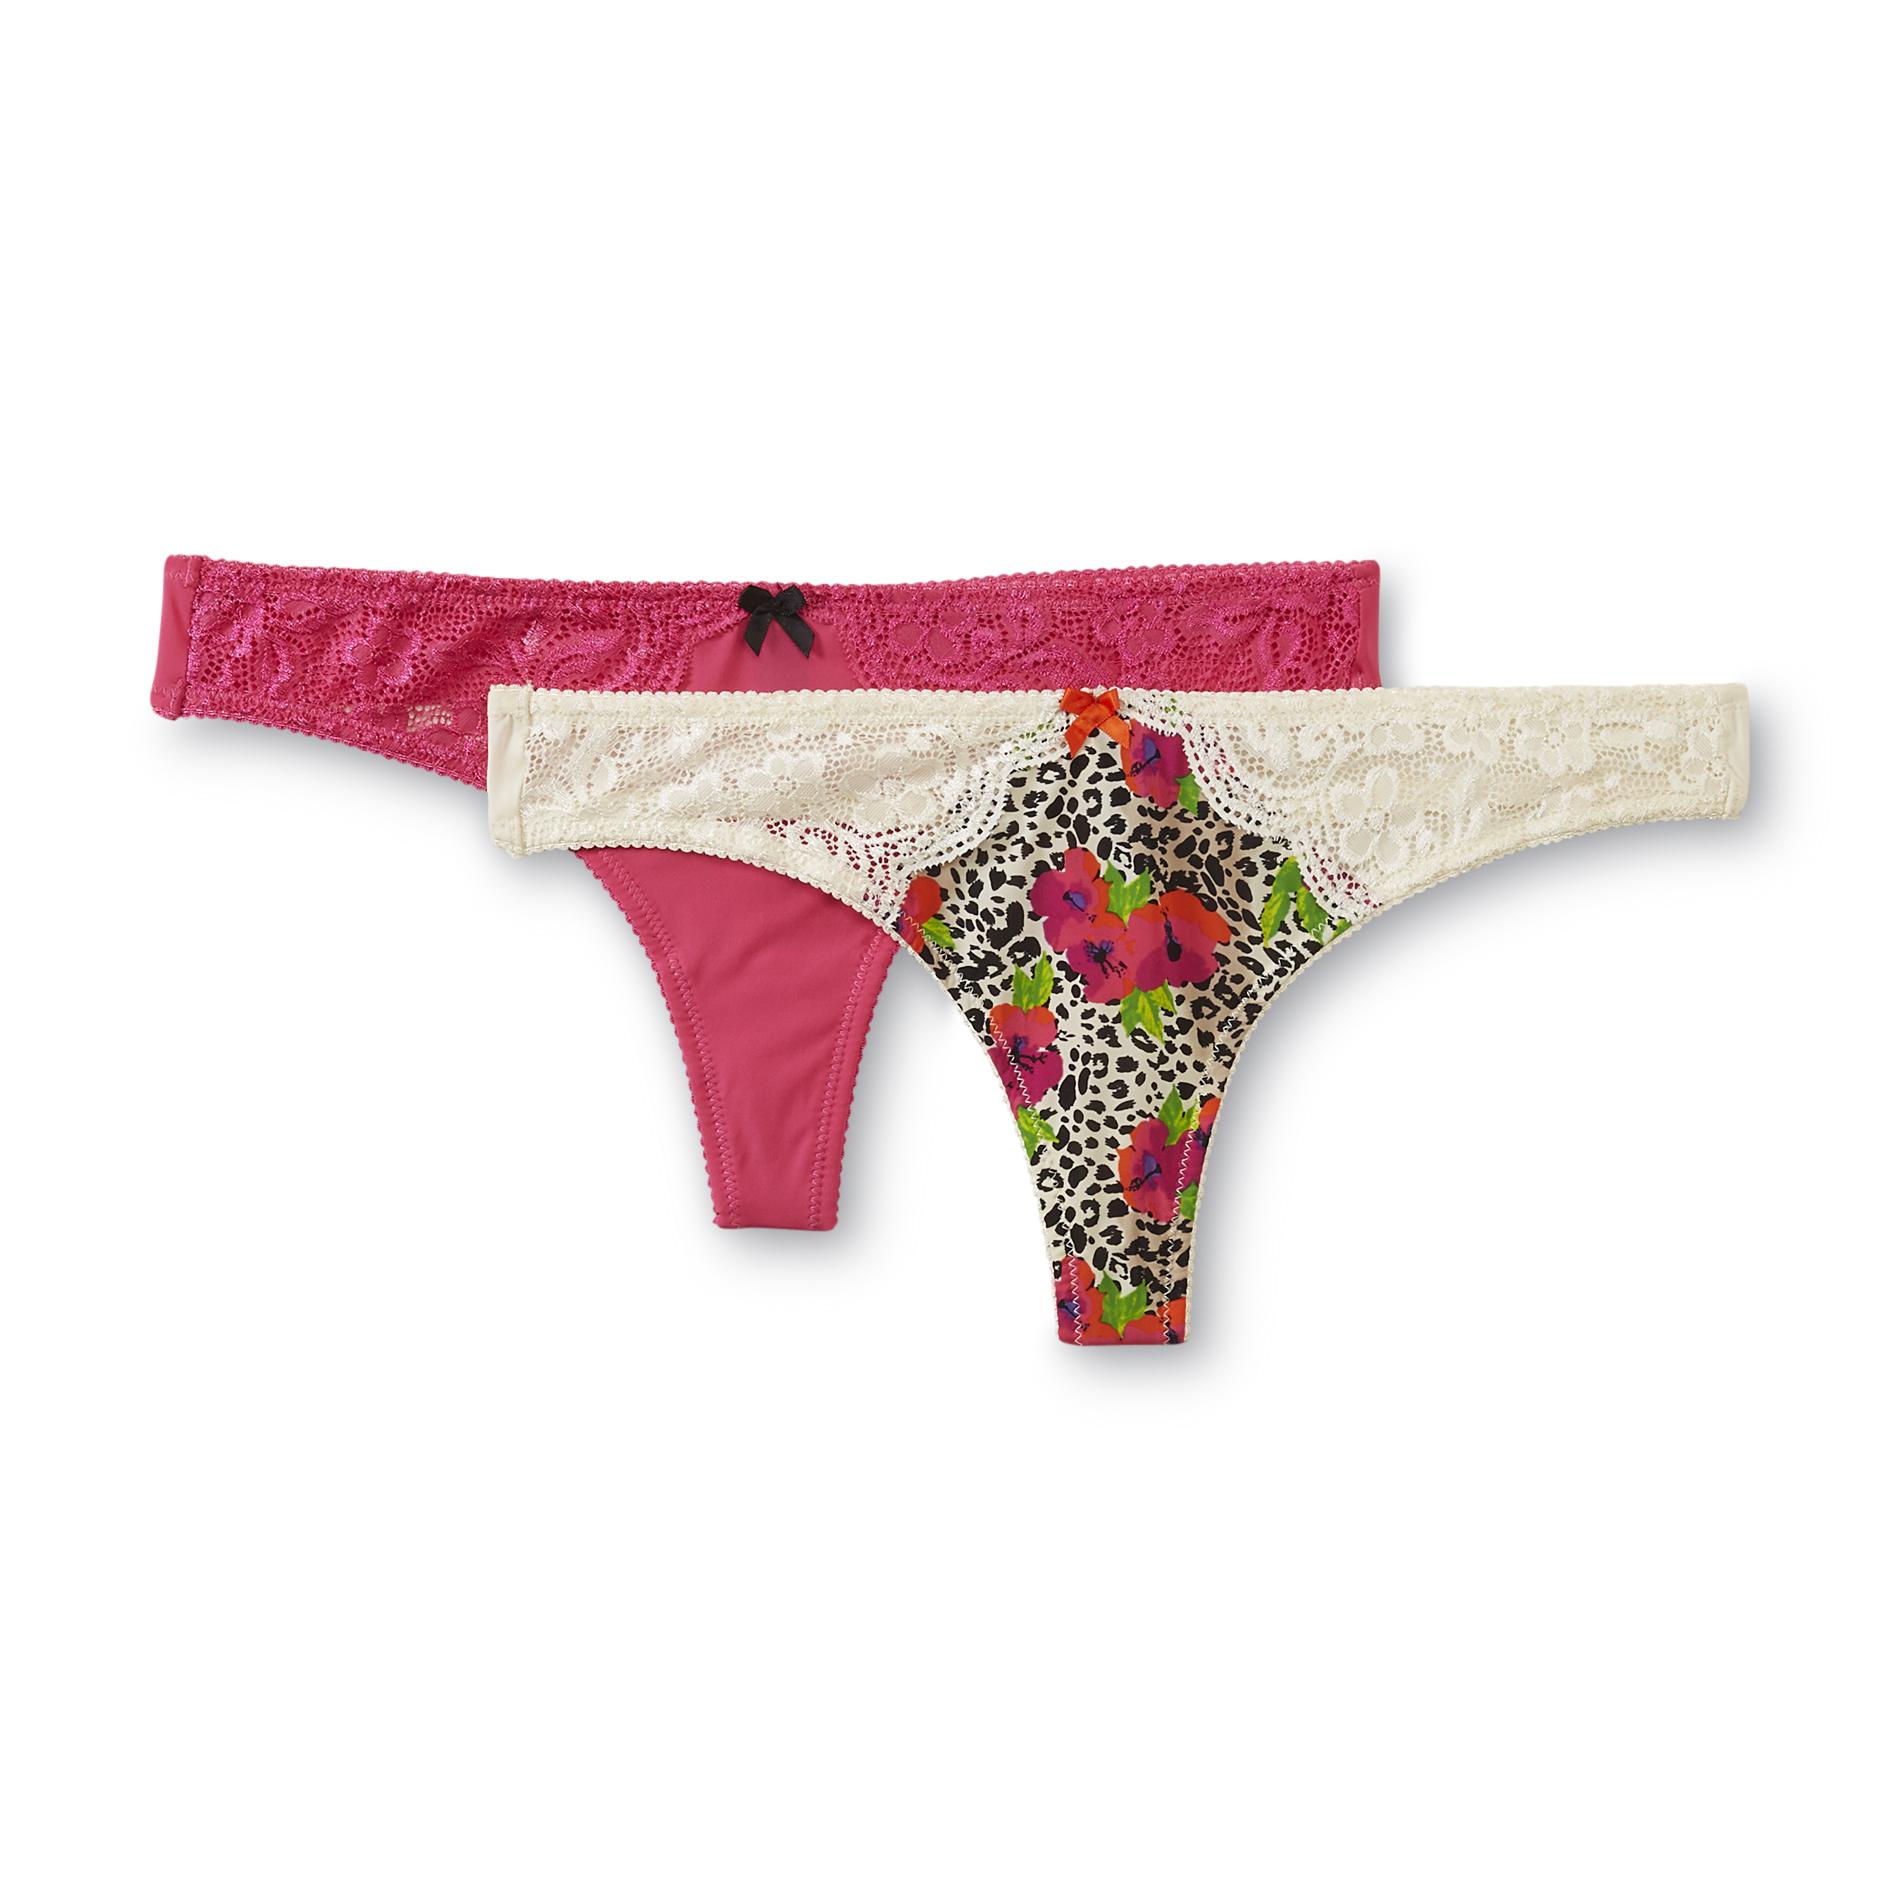 Sofia by Sofia Vergara Women's 2-Pack Thong Panties - Mixed Print